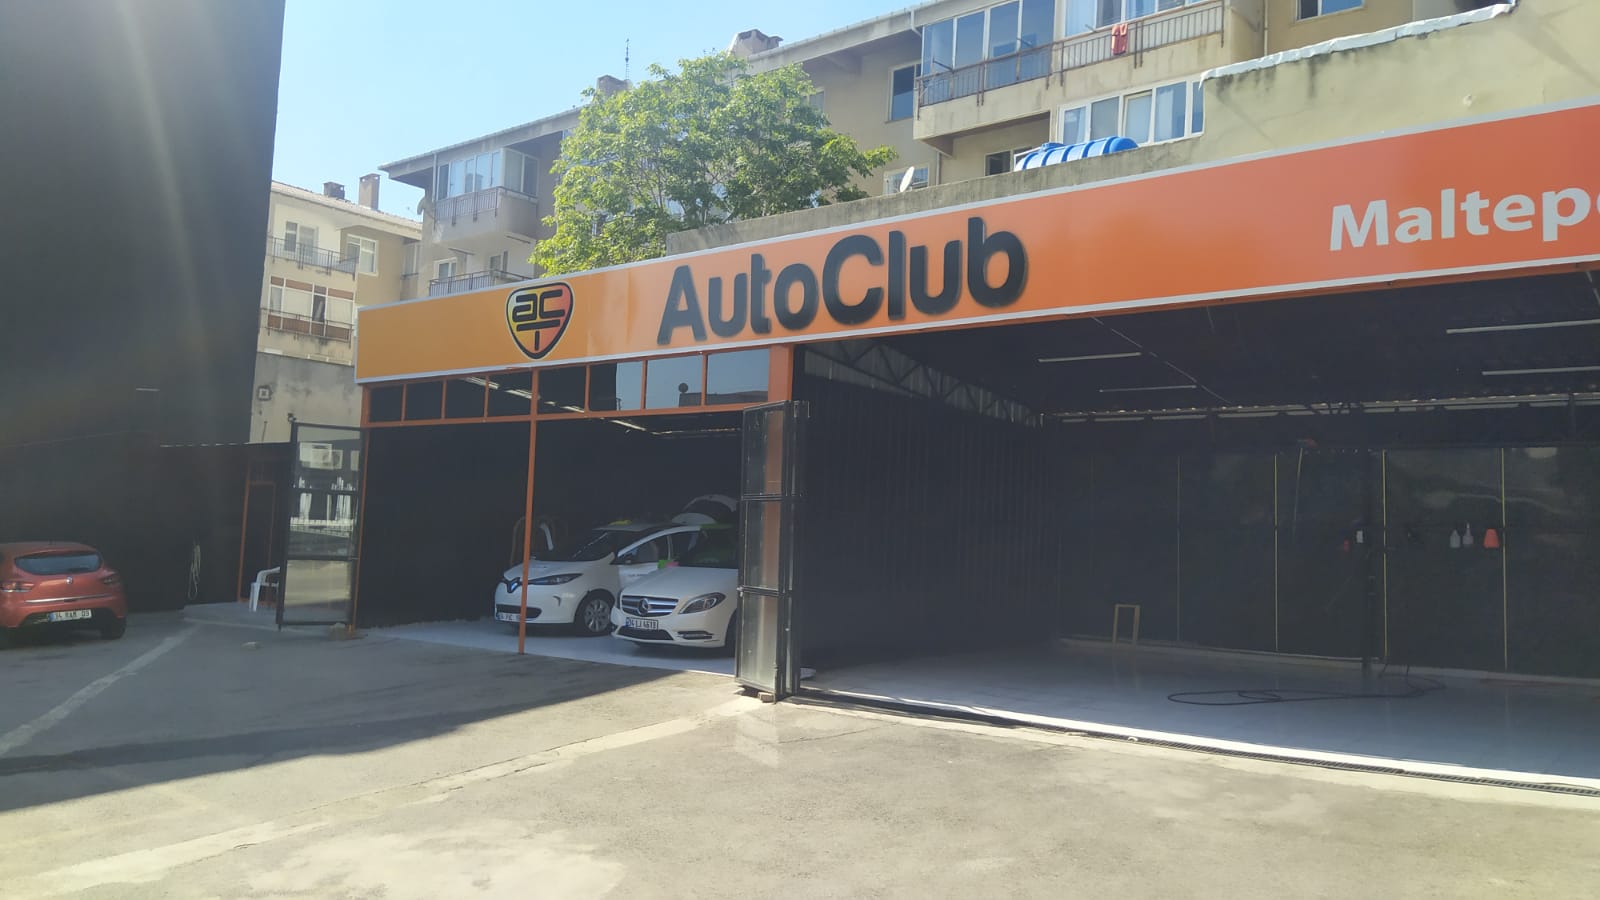 AutoClub Maltepe Çarşı - İstanbul Maltepe